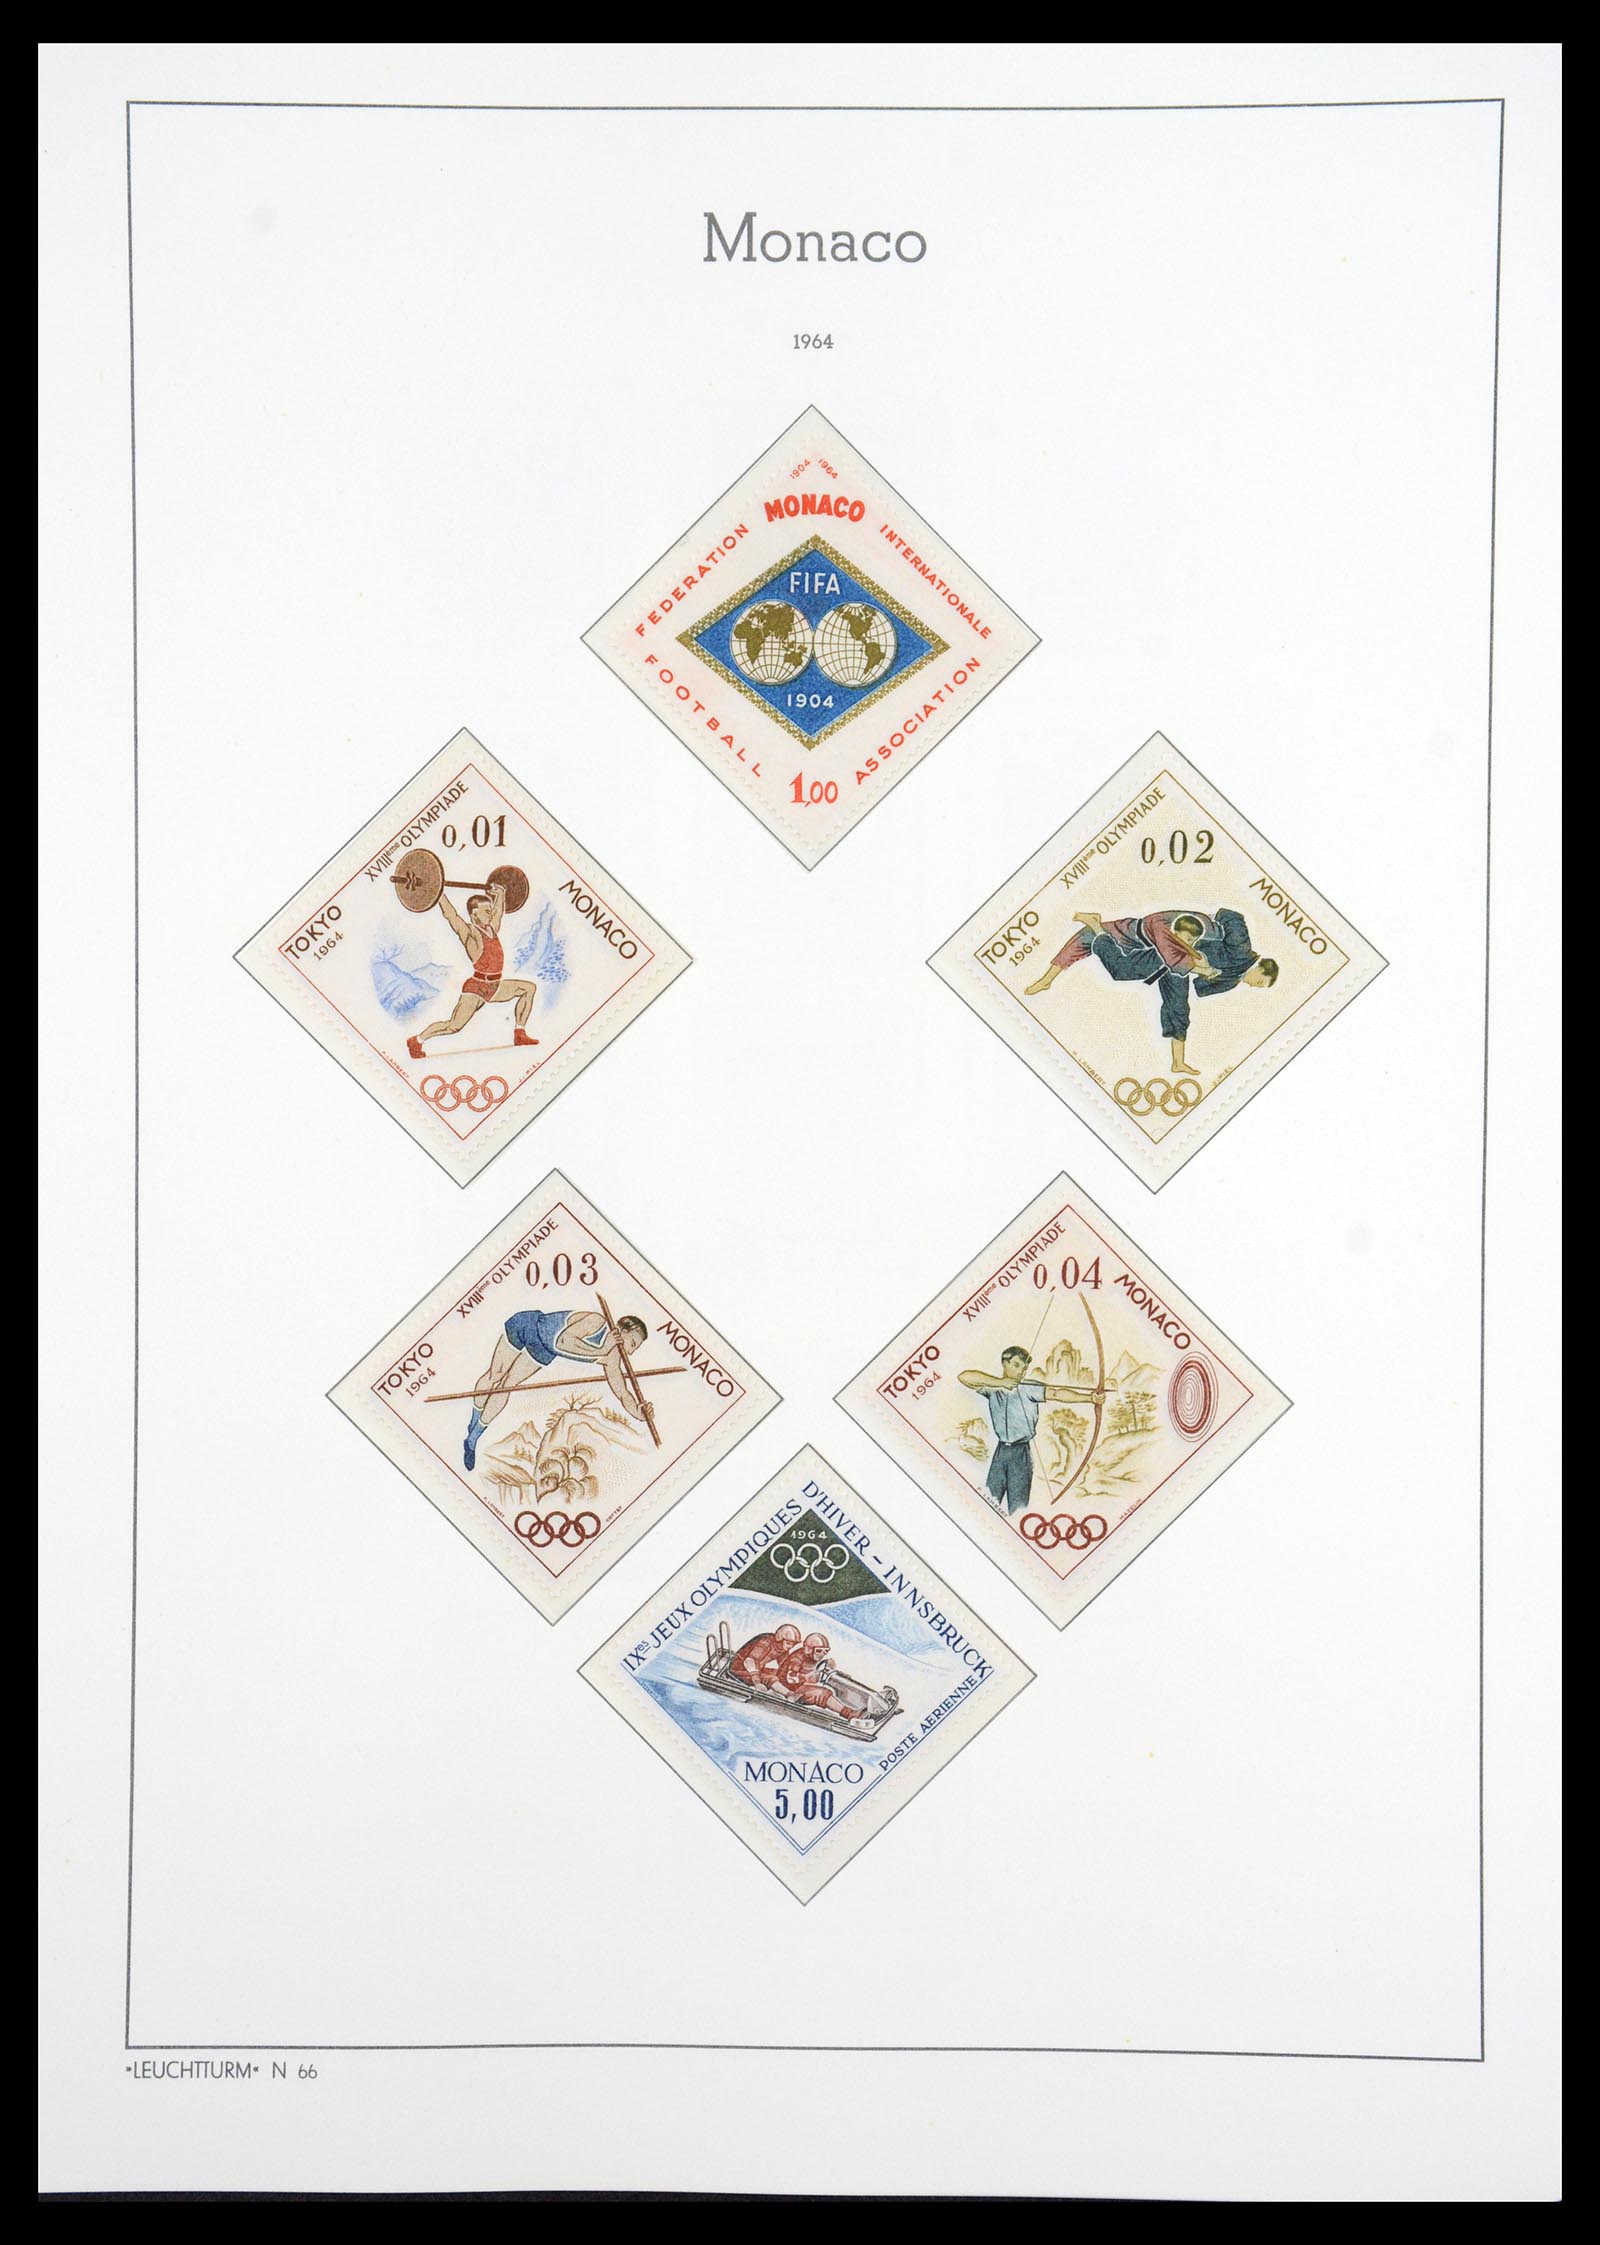 36735 088 - Stamp collection 36735 Monaco 1885-1966.